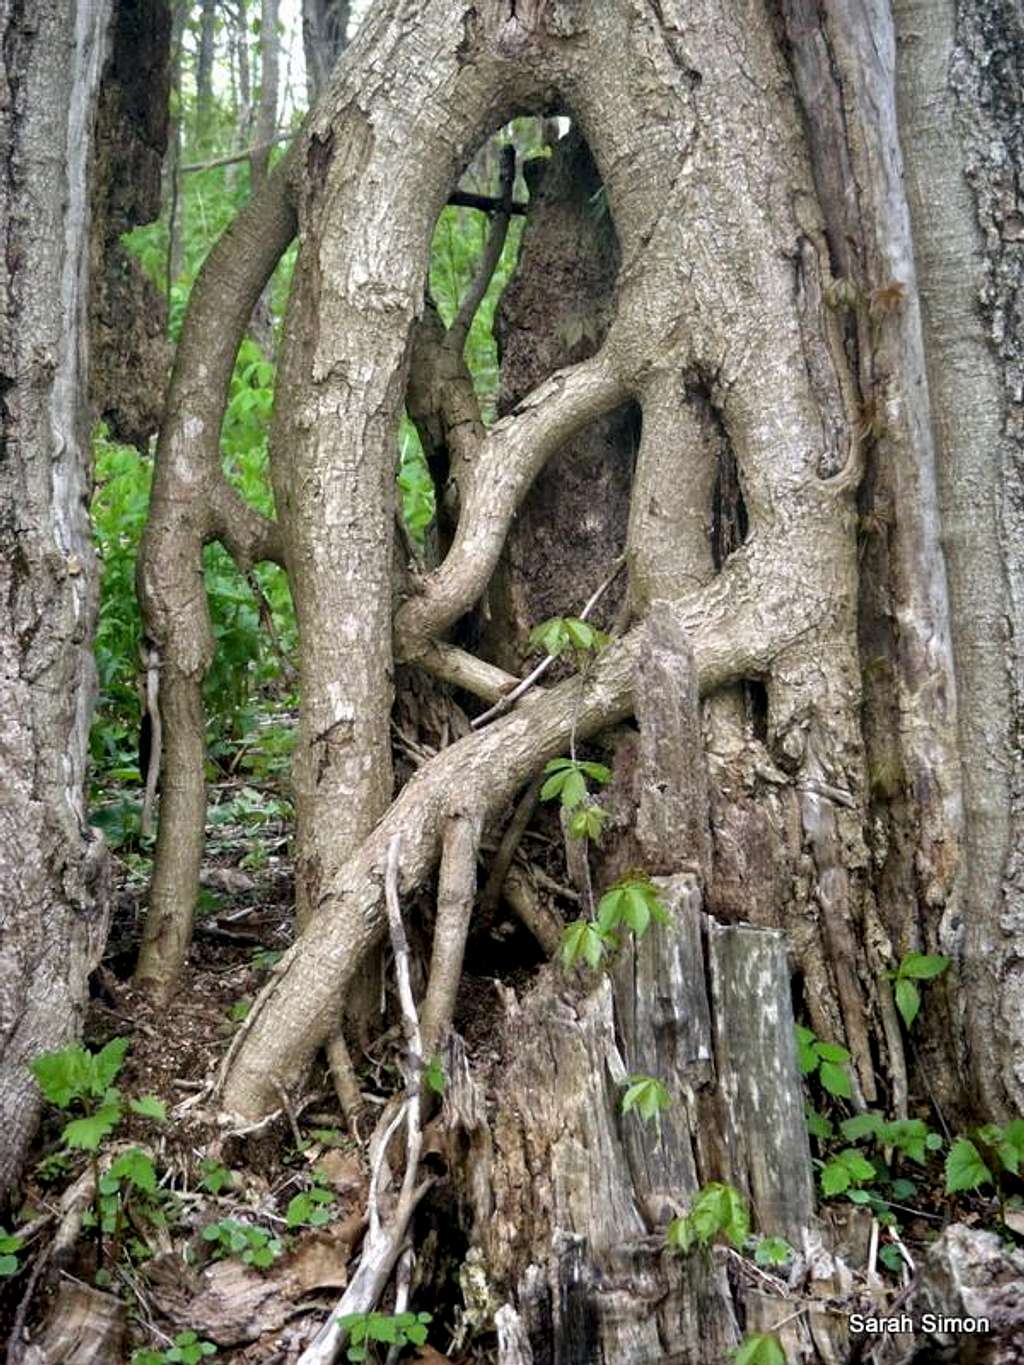 Wild-looking tree